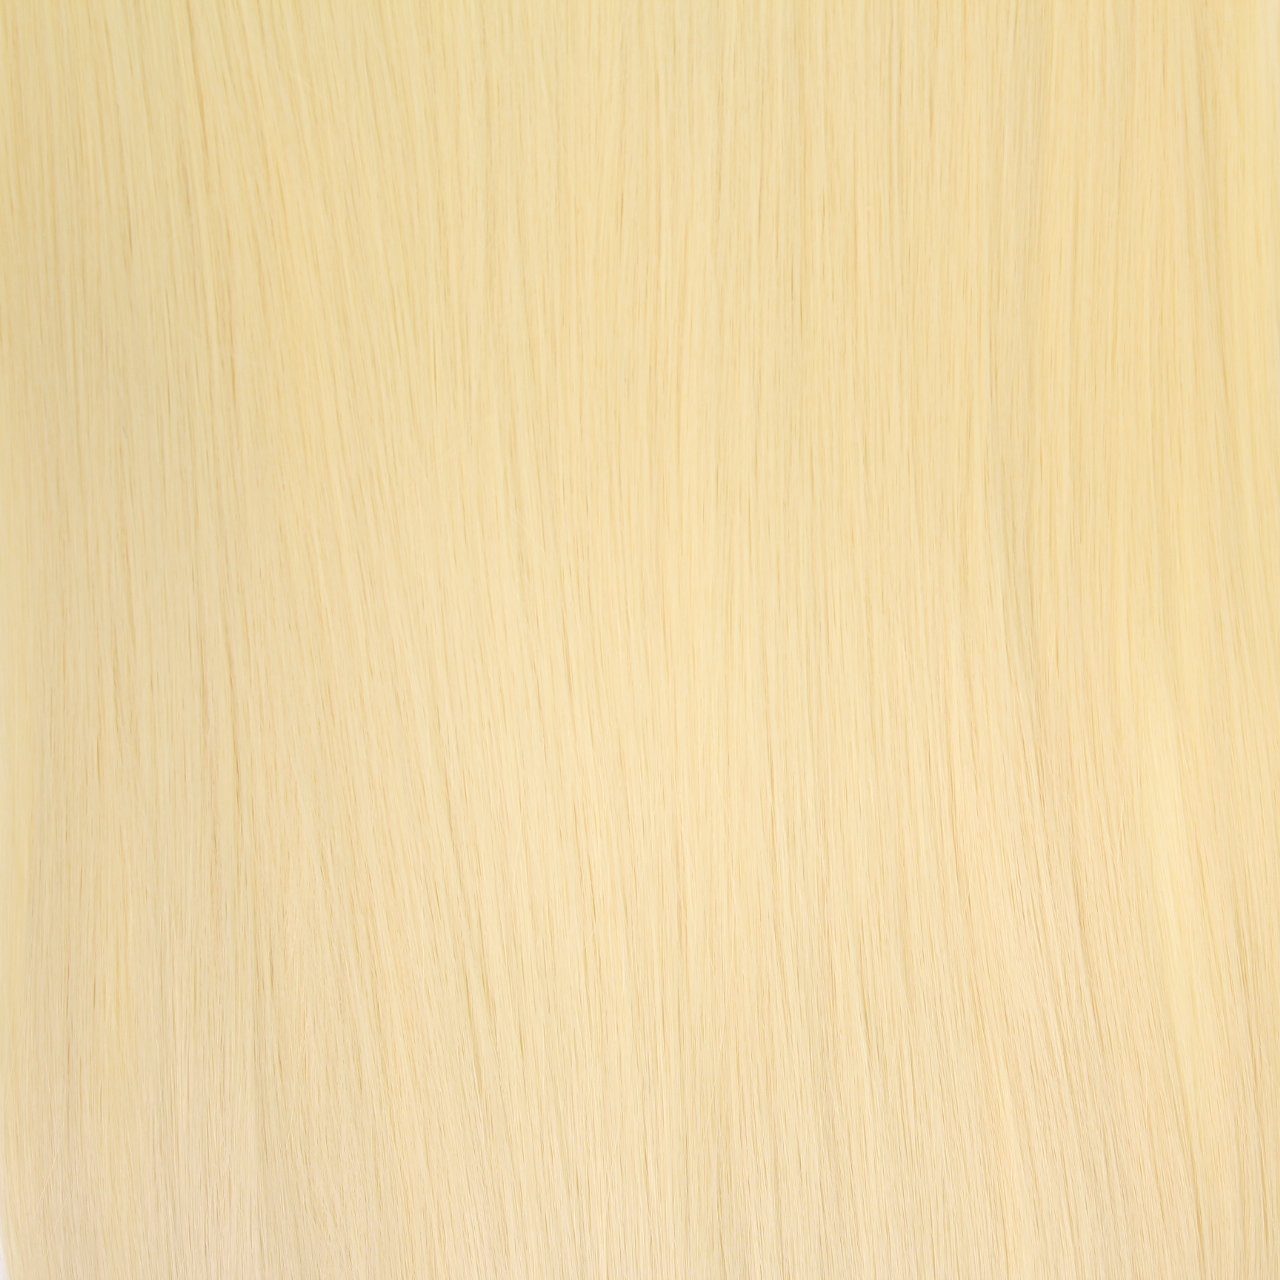 gewellt - Ponytail hair2heart Haarteil S-16 Kunsthaar-Extension /